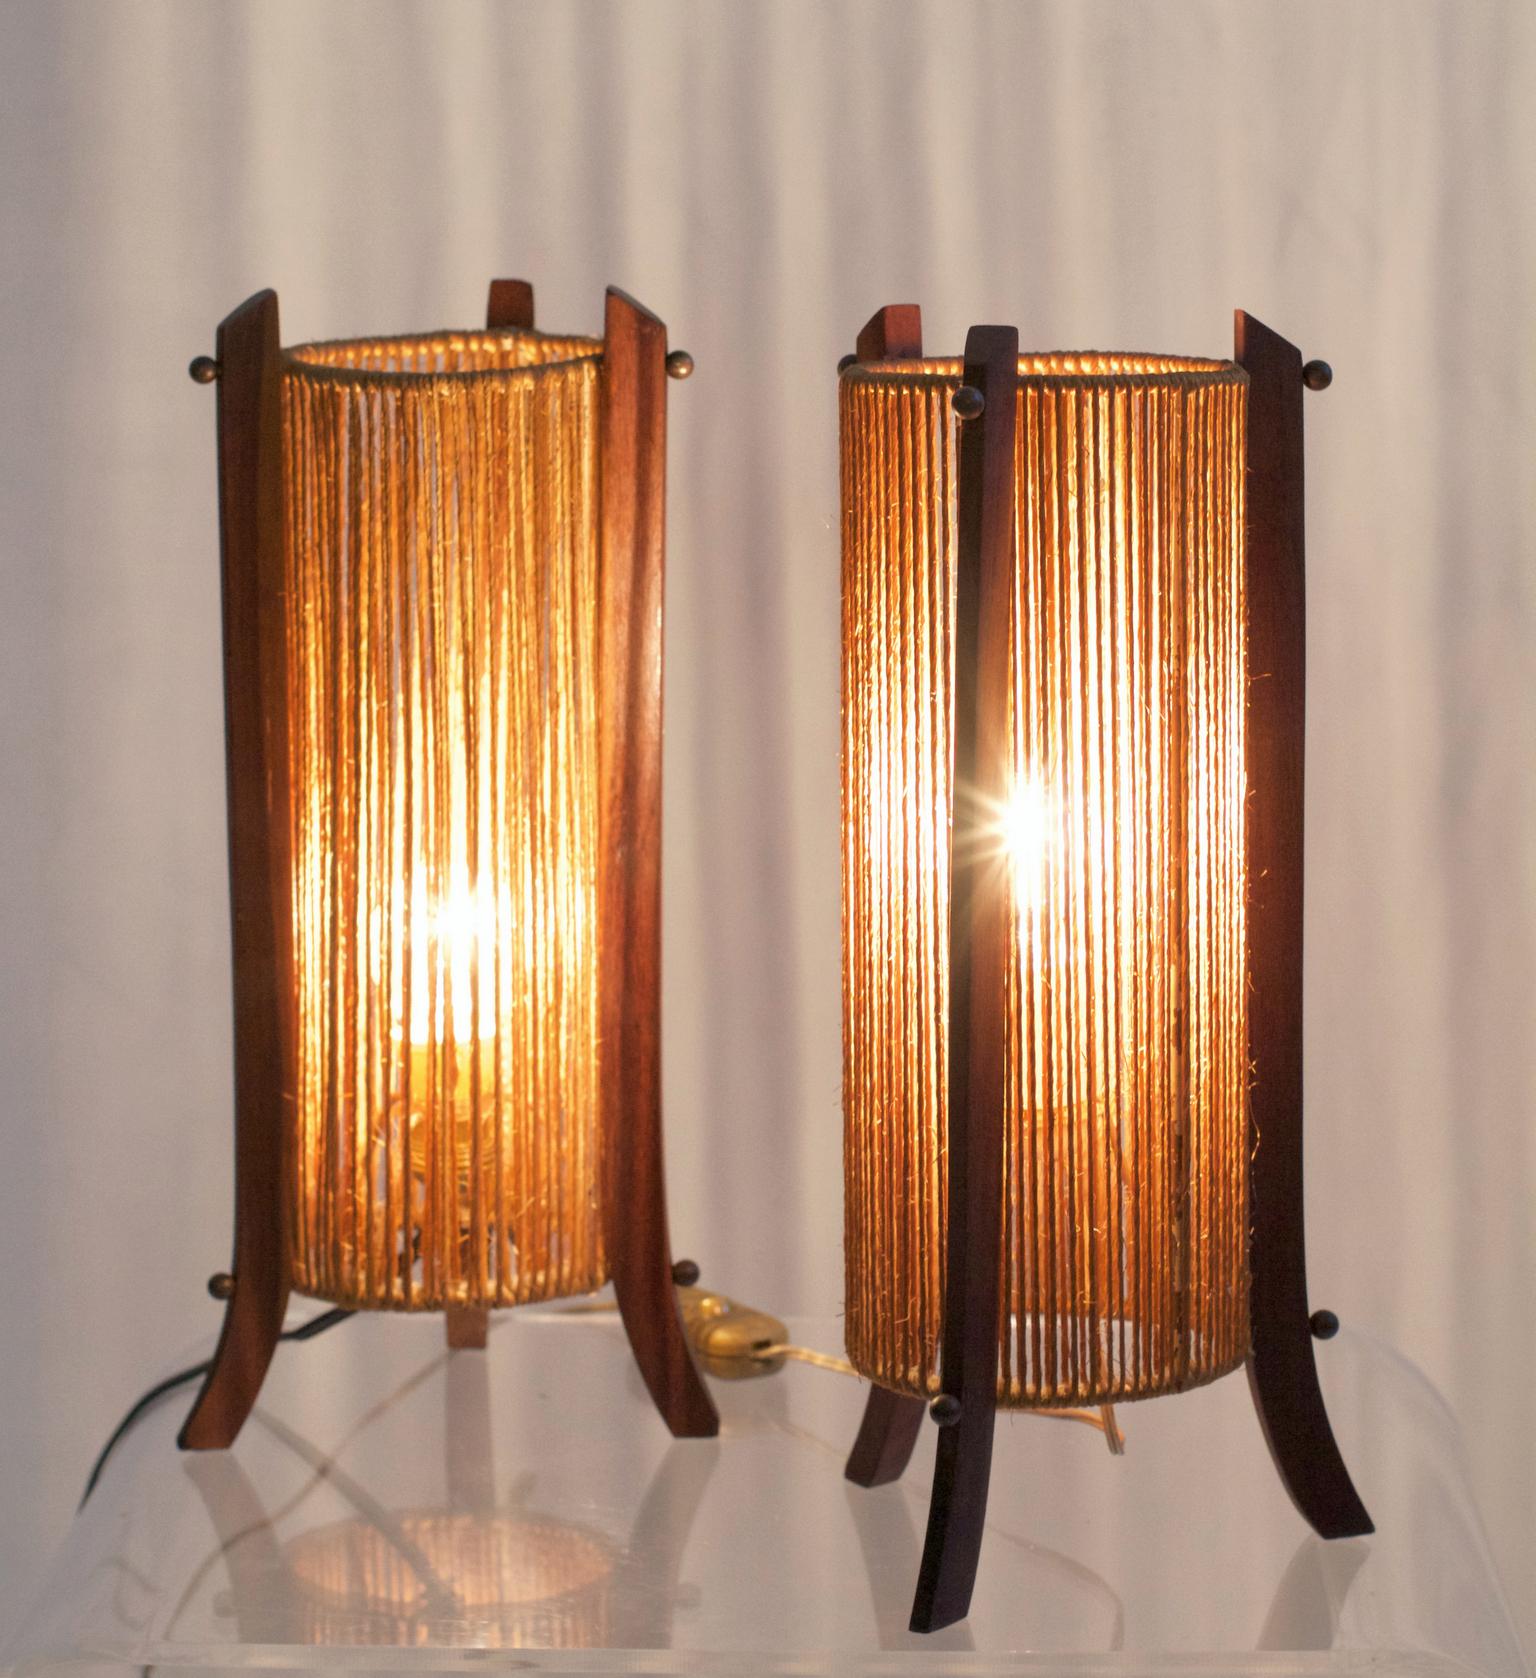 Midcentury Pair of Lamps in Teak Made in Italy 1